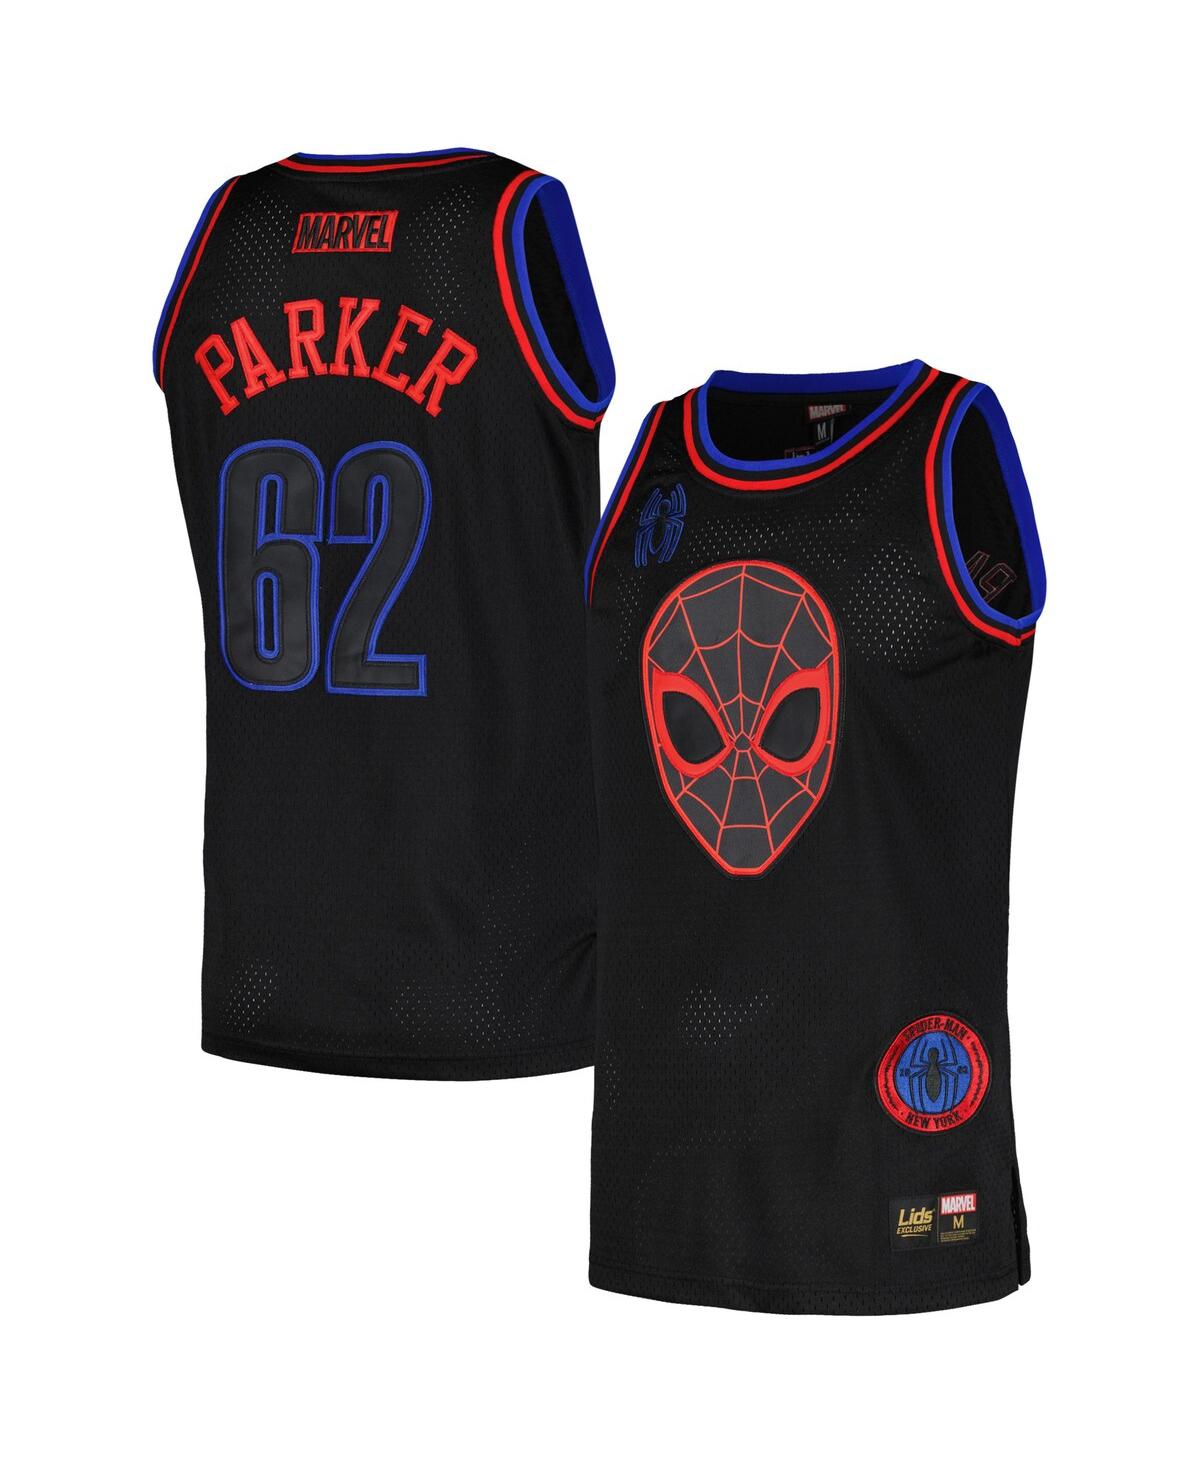 Men's Black Spider-Man Marvel Basketball Jersey - Black